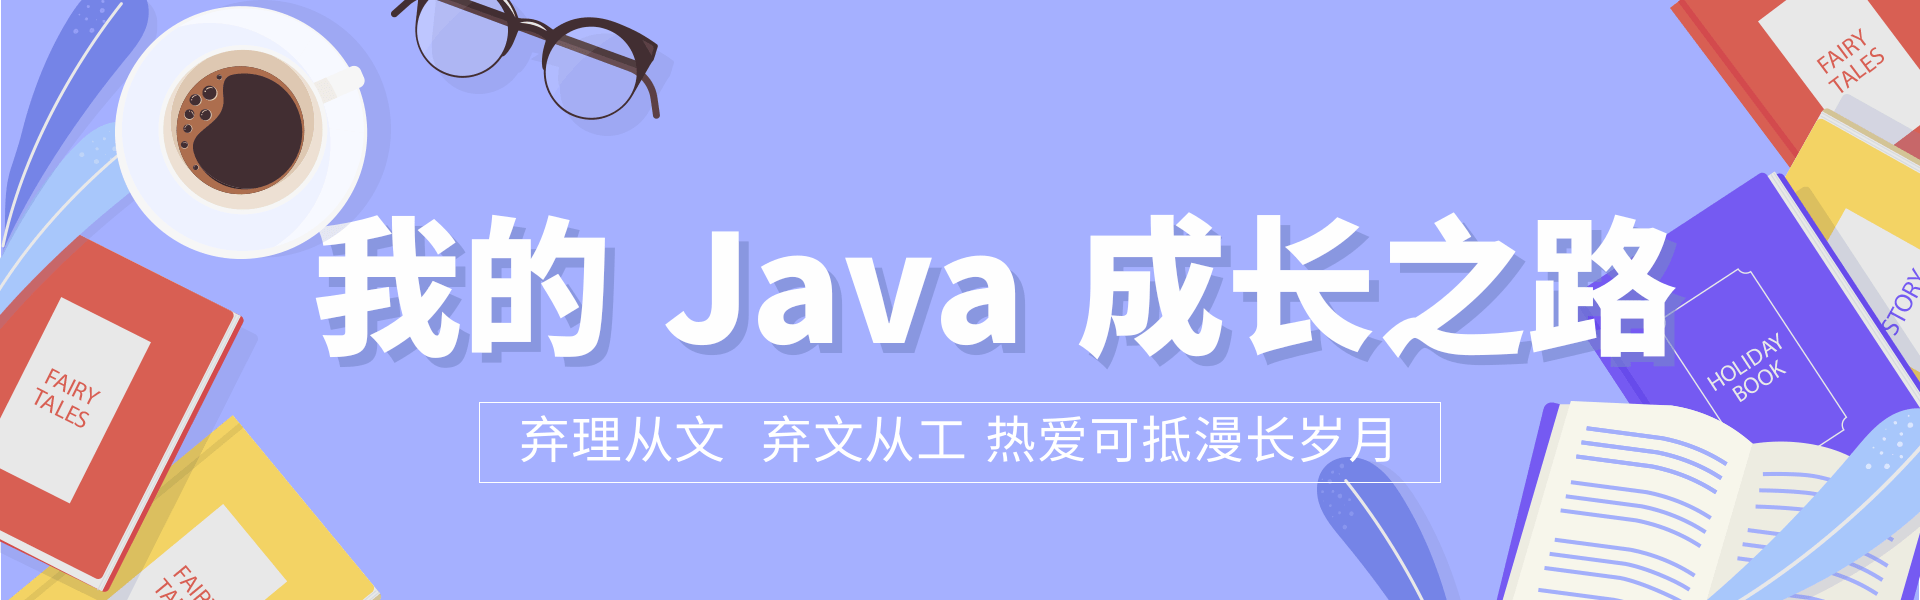 我的 Java 成长之路.png